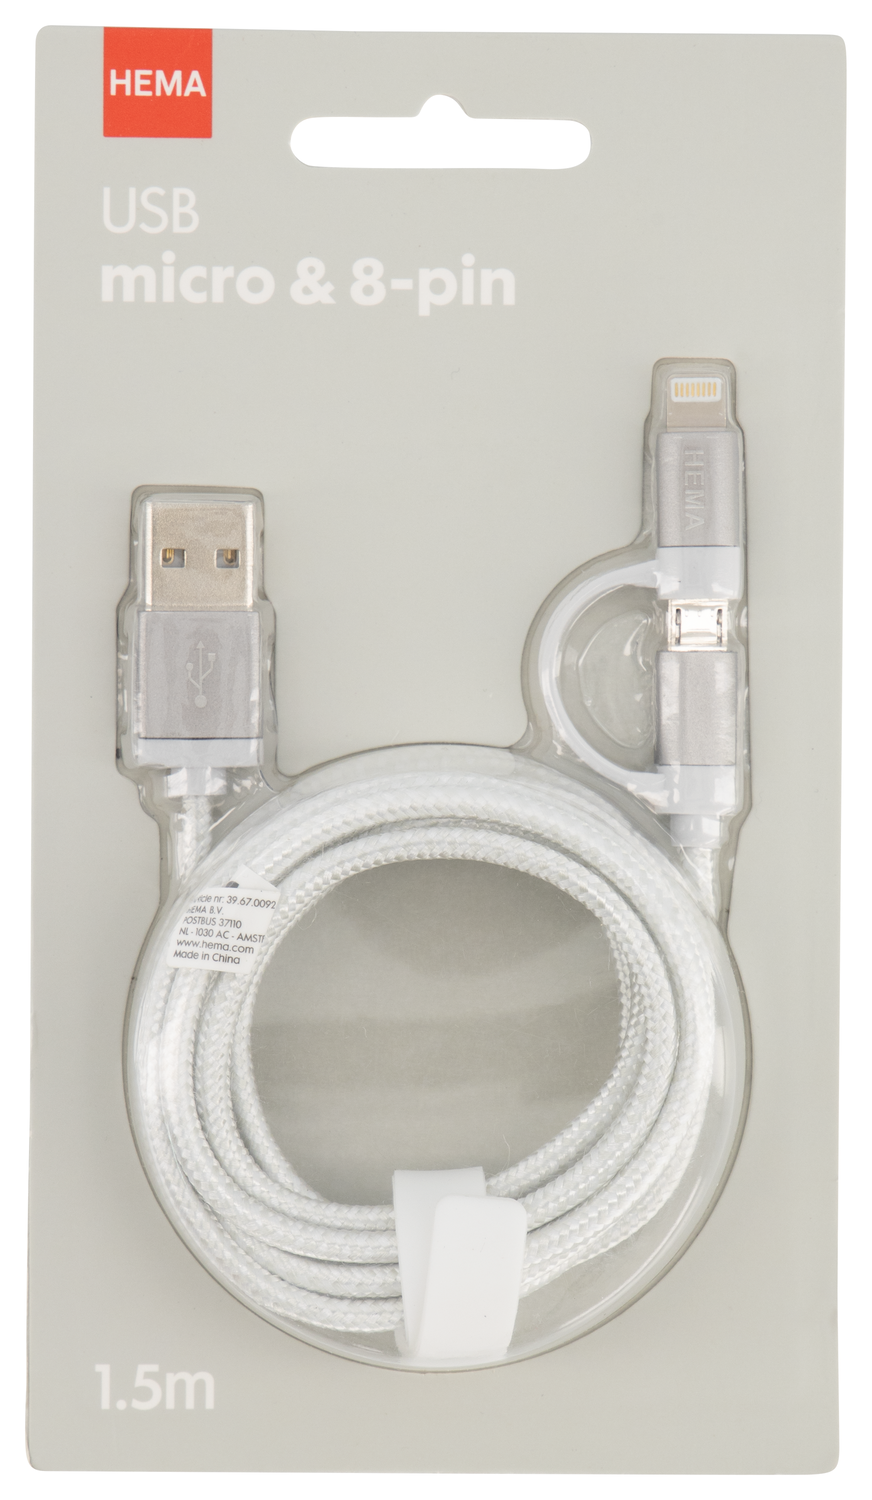 HEMA USB Laadkabel Micro & 8-pin